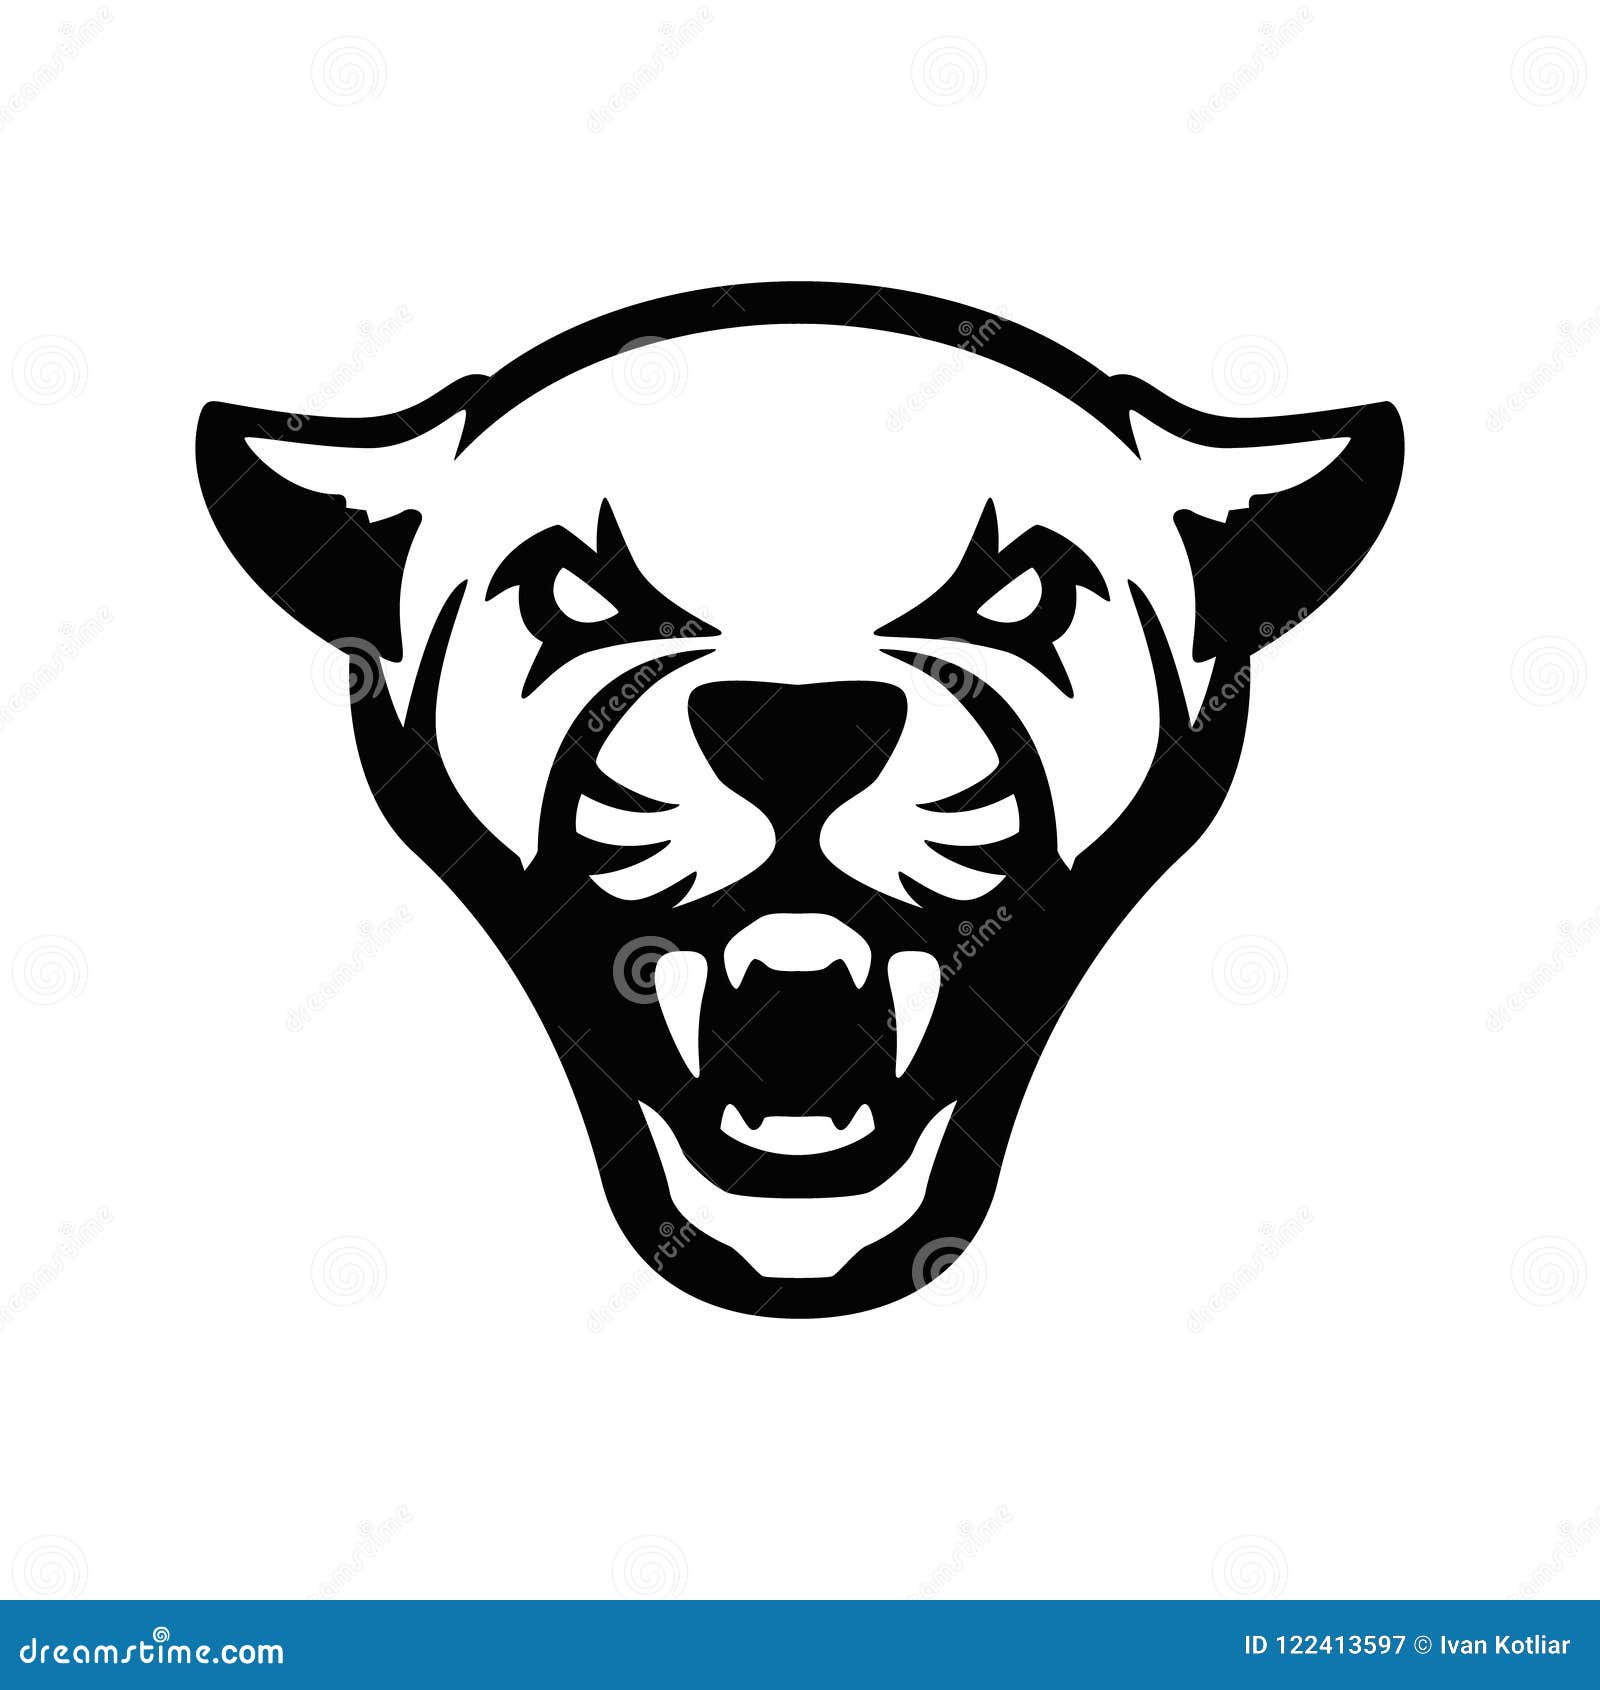 puma and jaguar logo